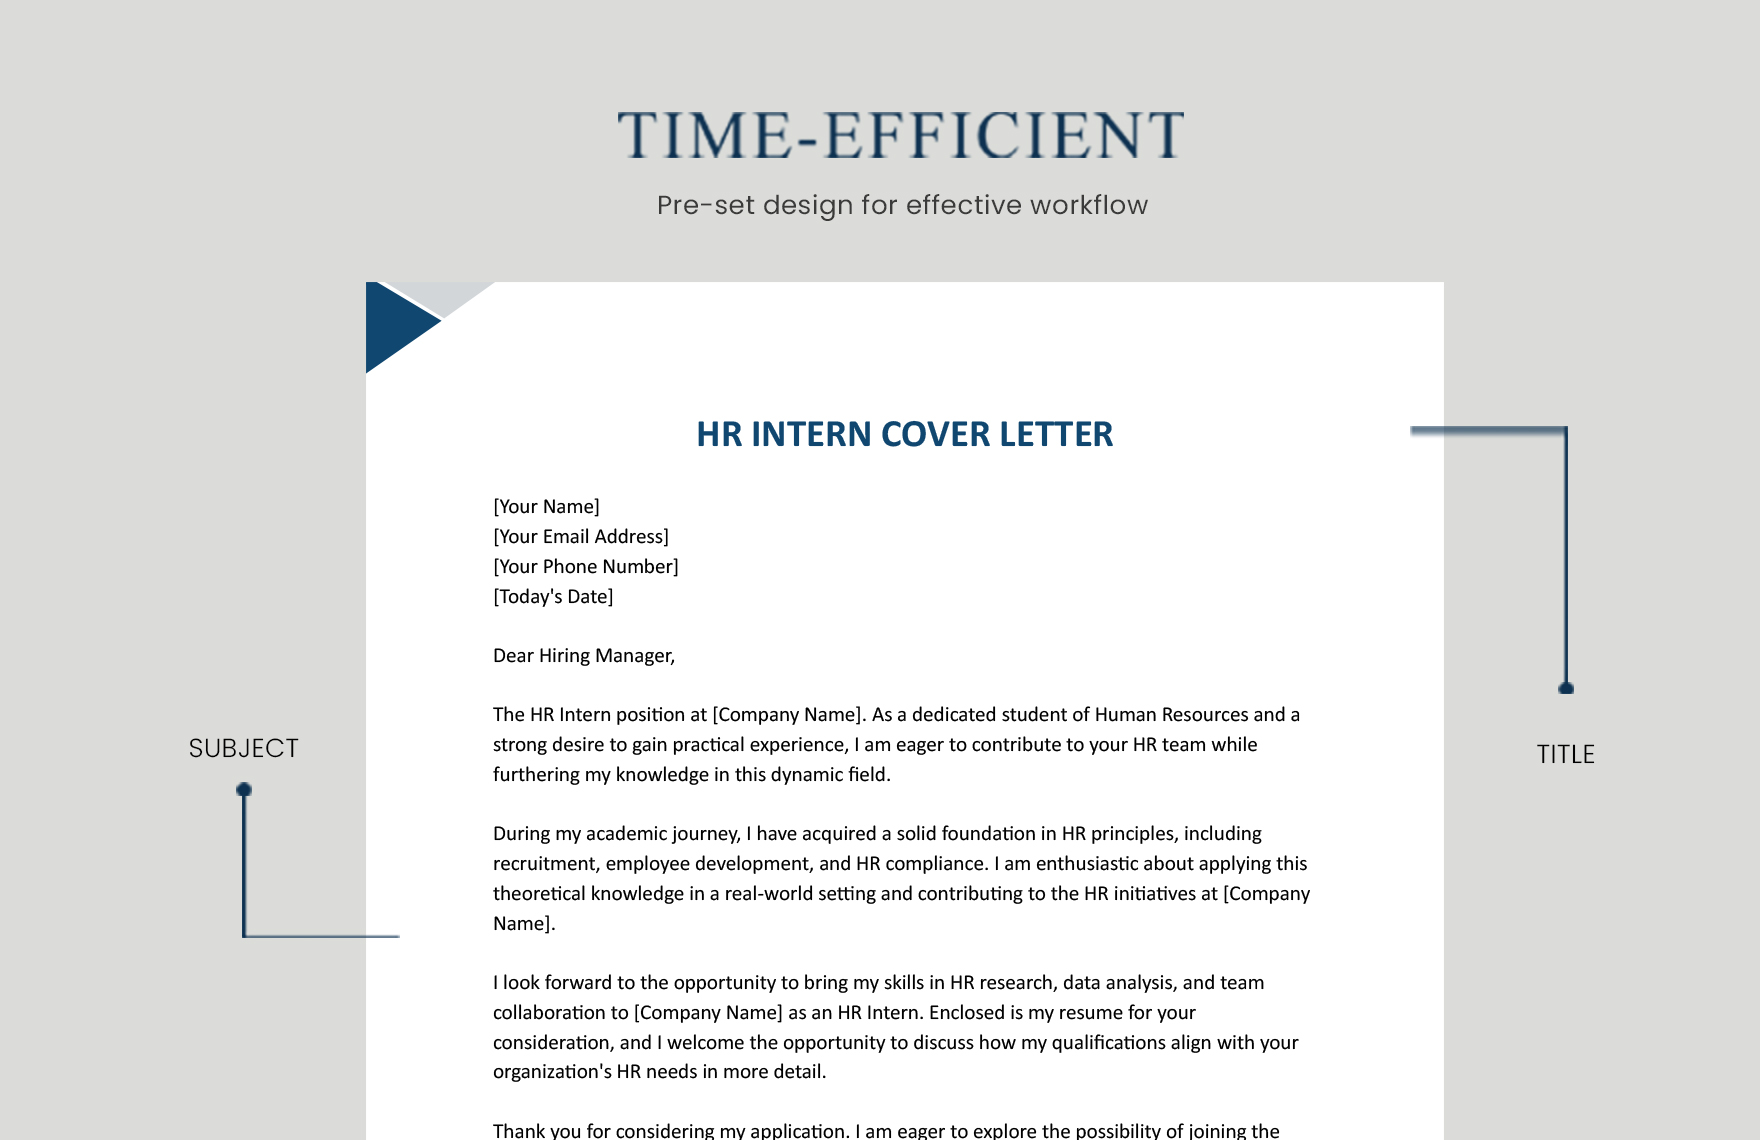 HR Intern Cover Letter